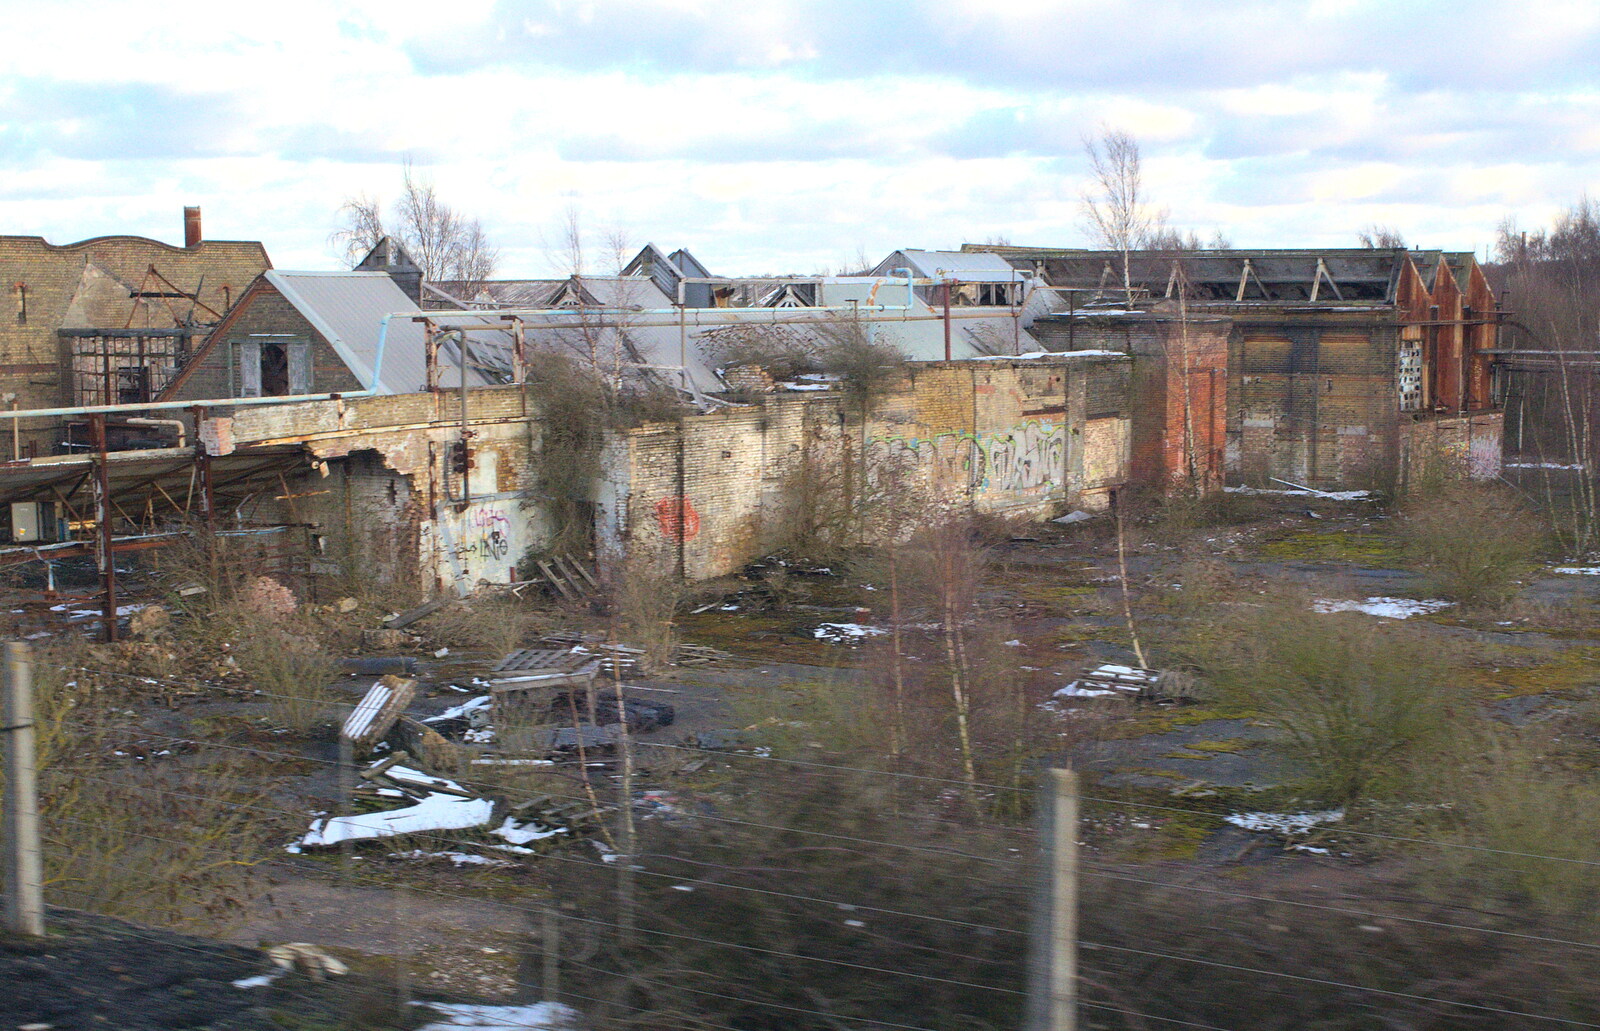 Bramford Dereliction and Marconi Demolition, Chelmsford - 12th March 2013: Graffiti on the walls